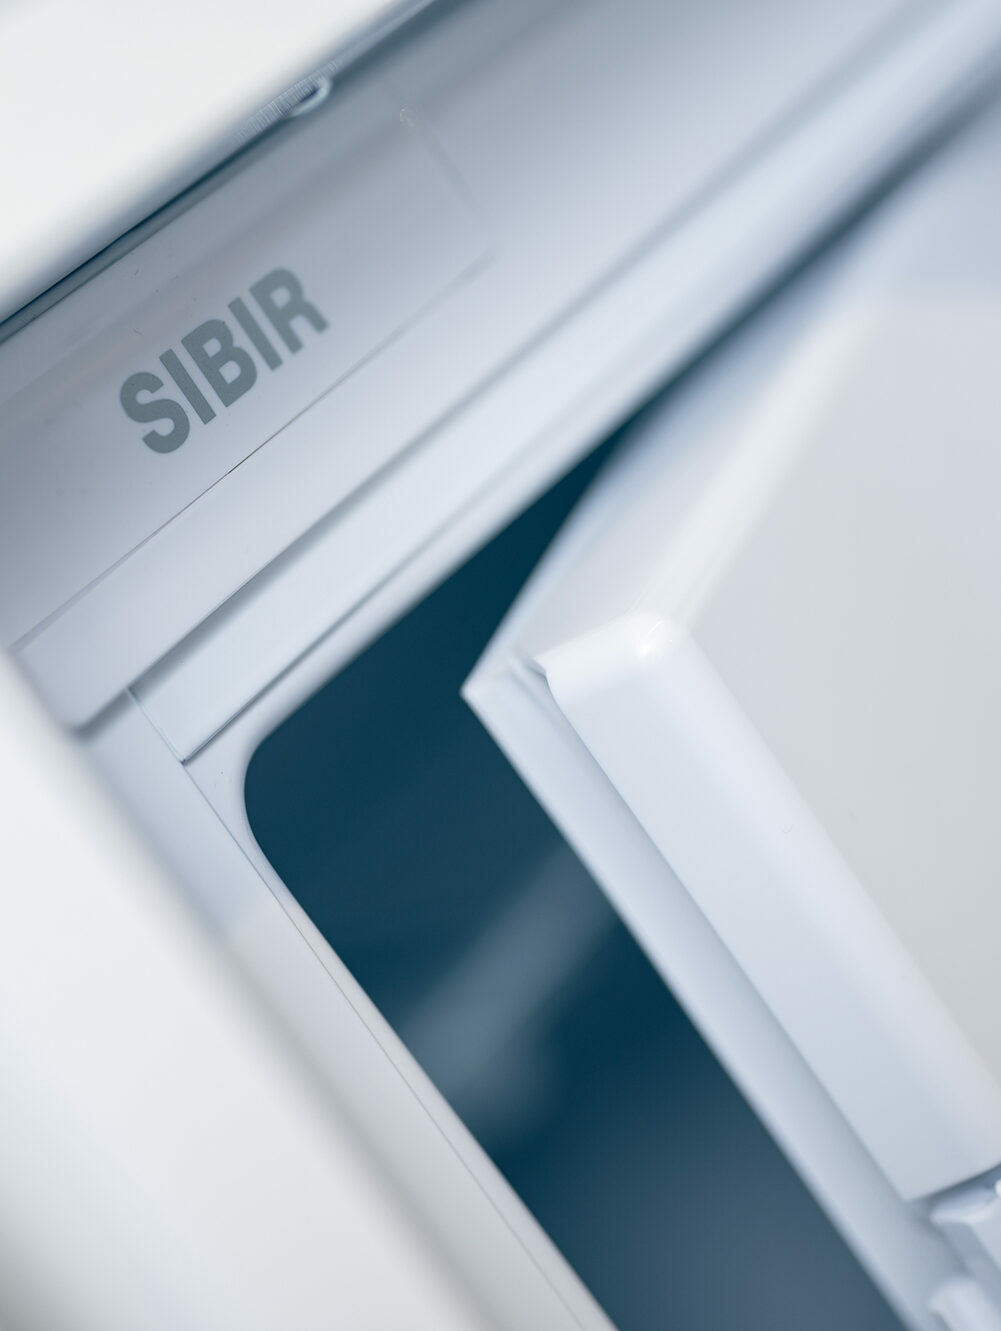 Seal freezer compartment SIBIR refrigerator